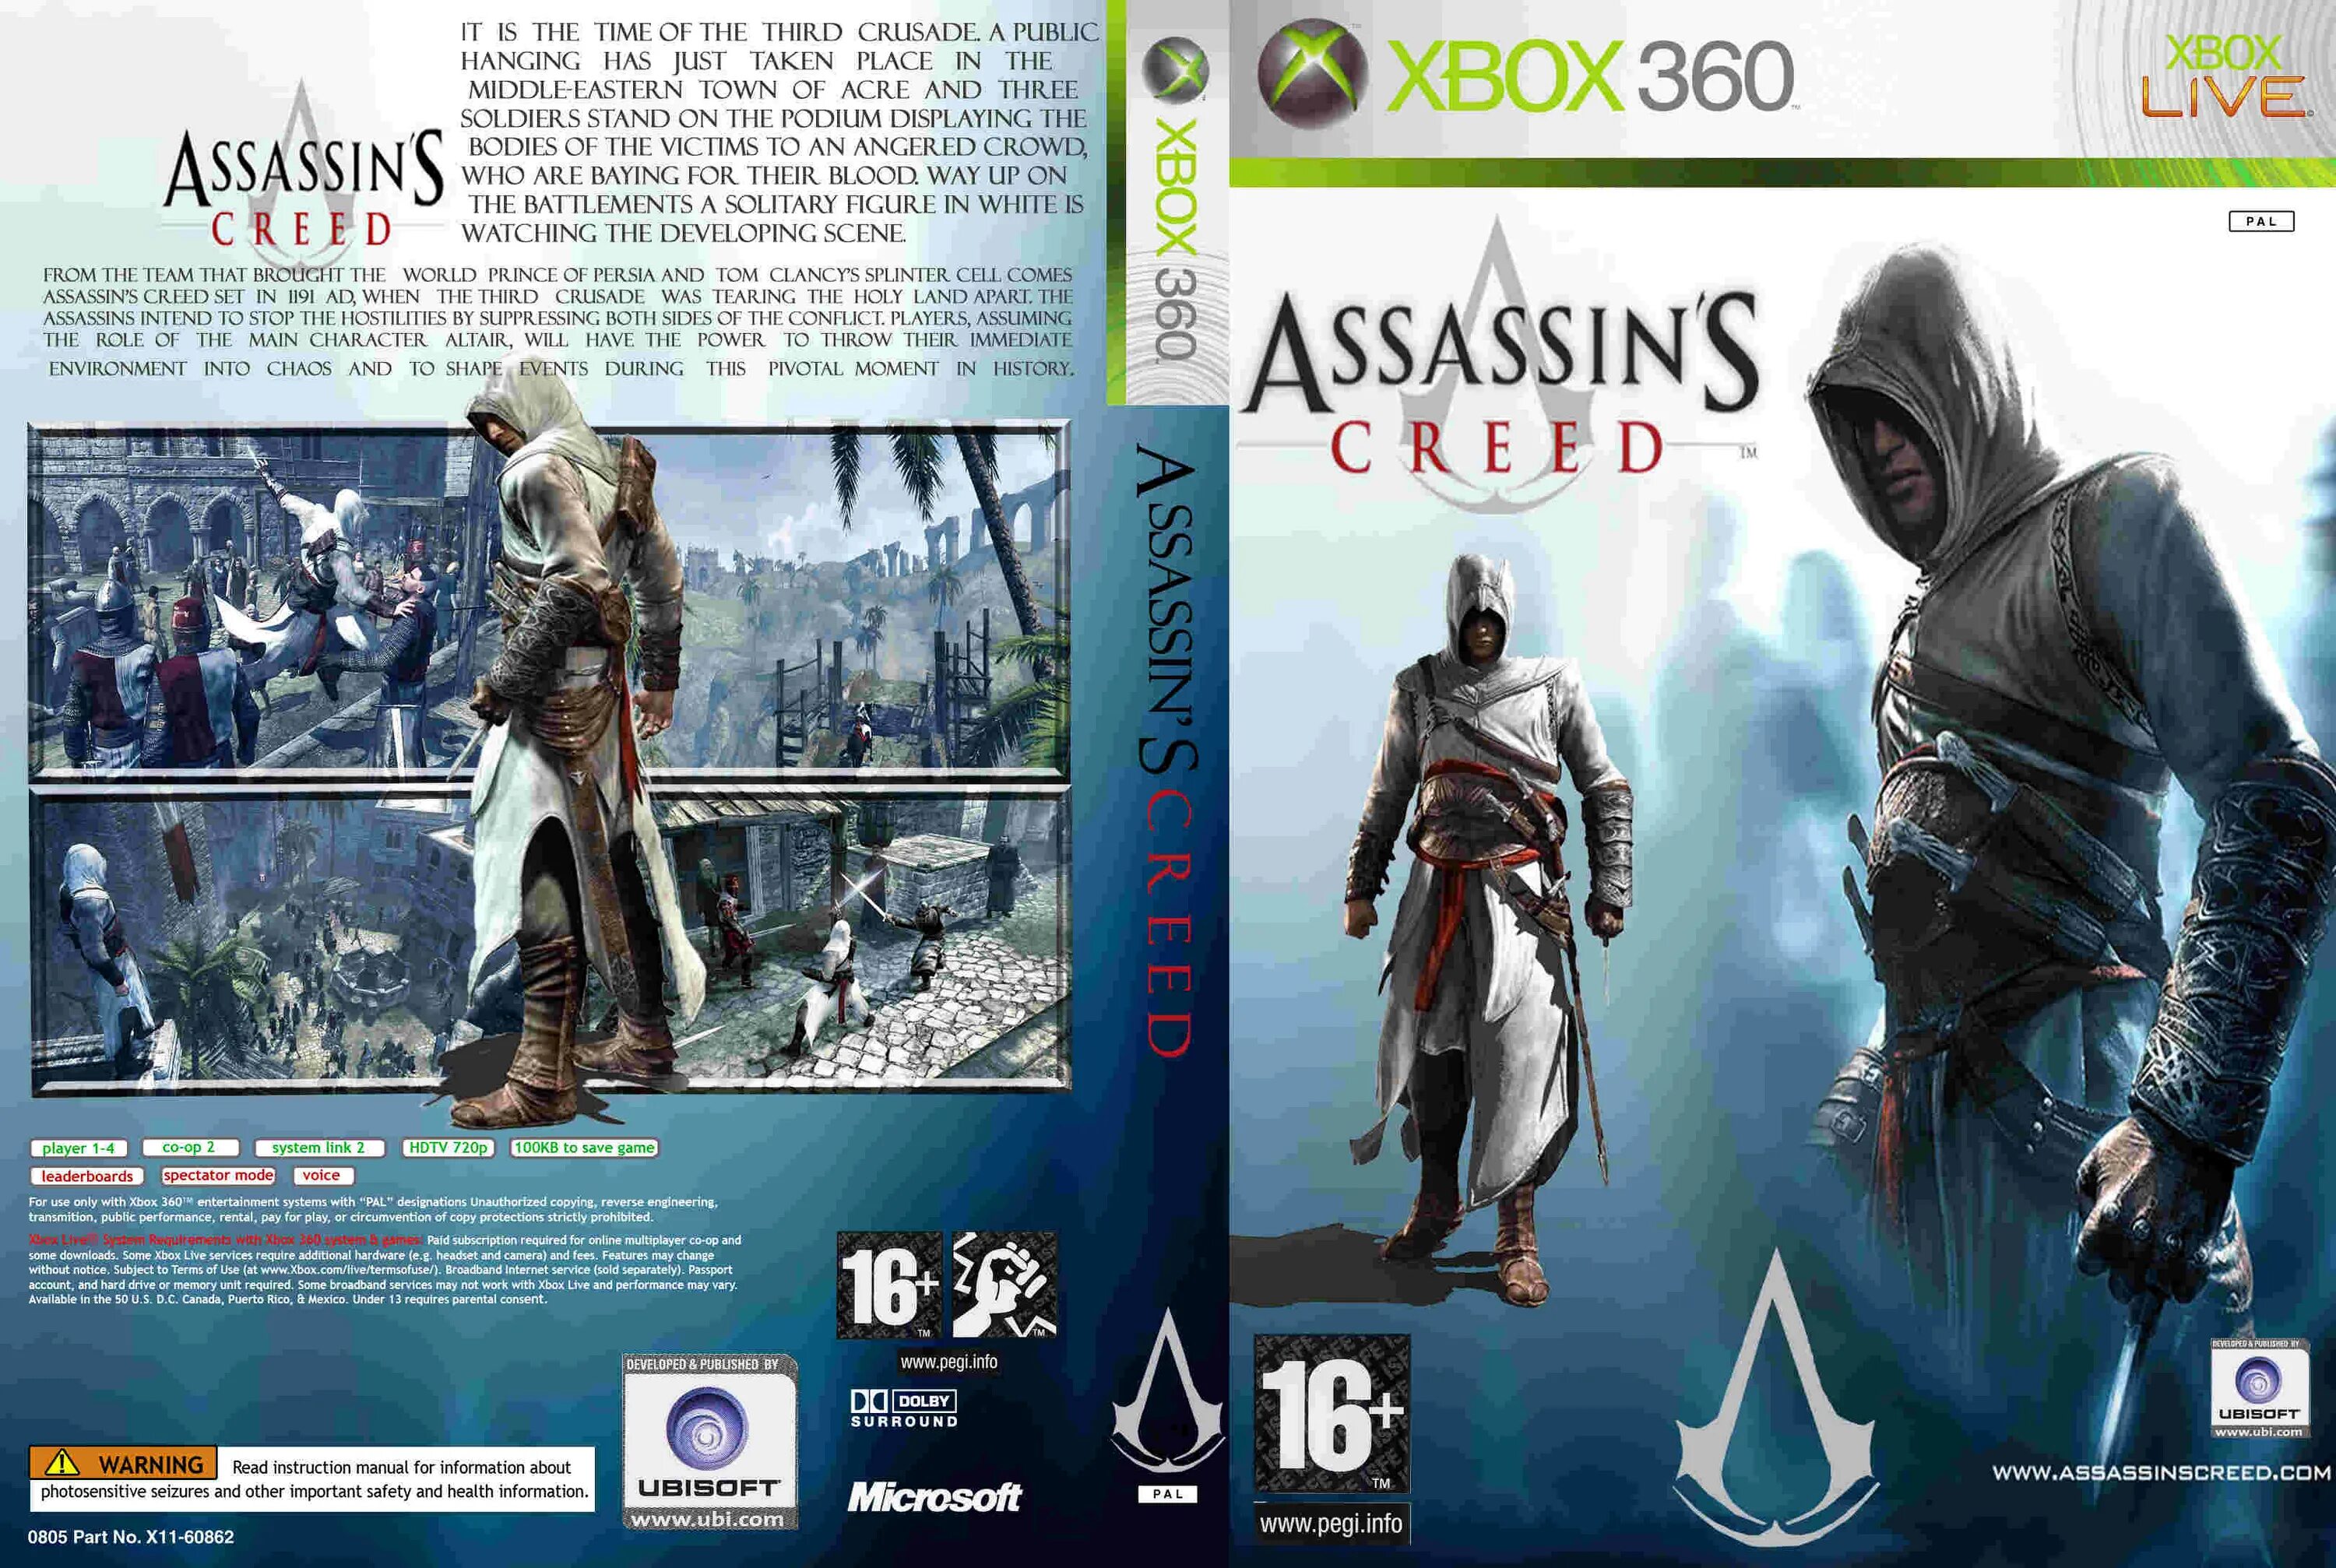 Ассасин хбокс. Диски для Xbox 360 ассасин. DVD Assassins Creed диск. Assassin's Creed 1 Xbox 360 обложка. Assassins Creed 1 диск CD.